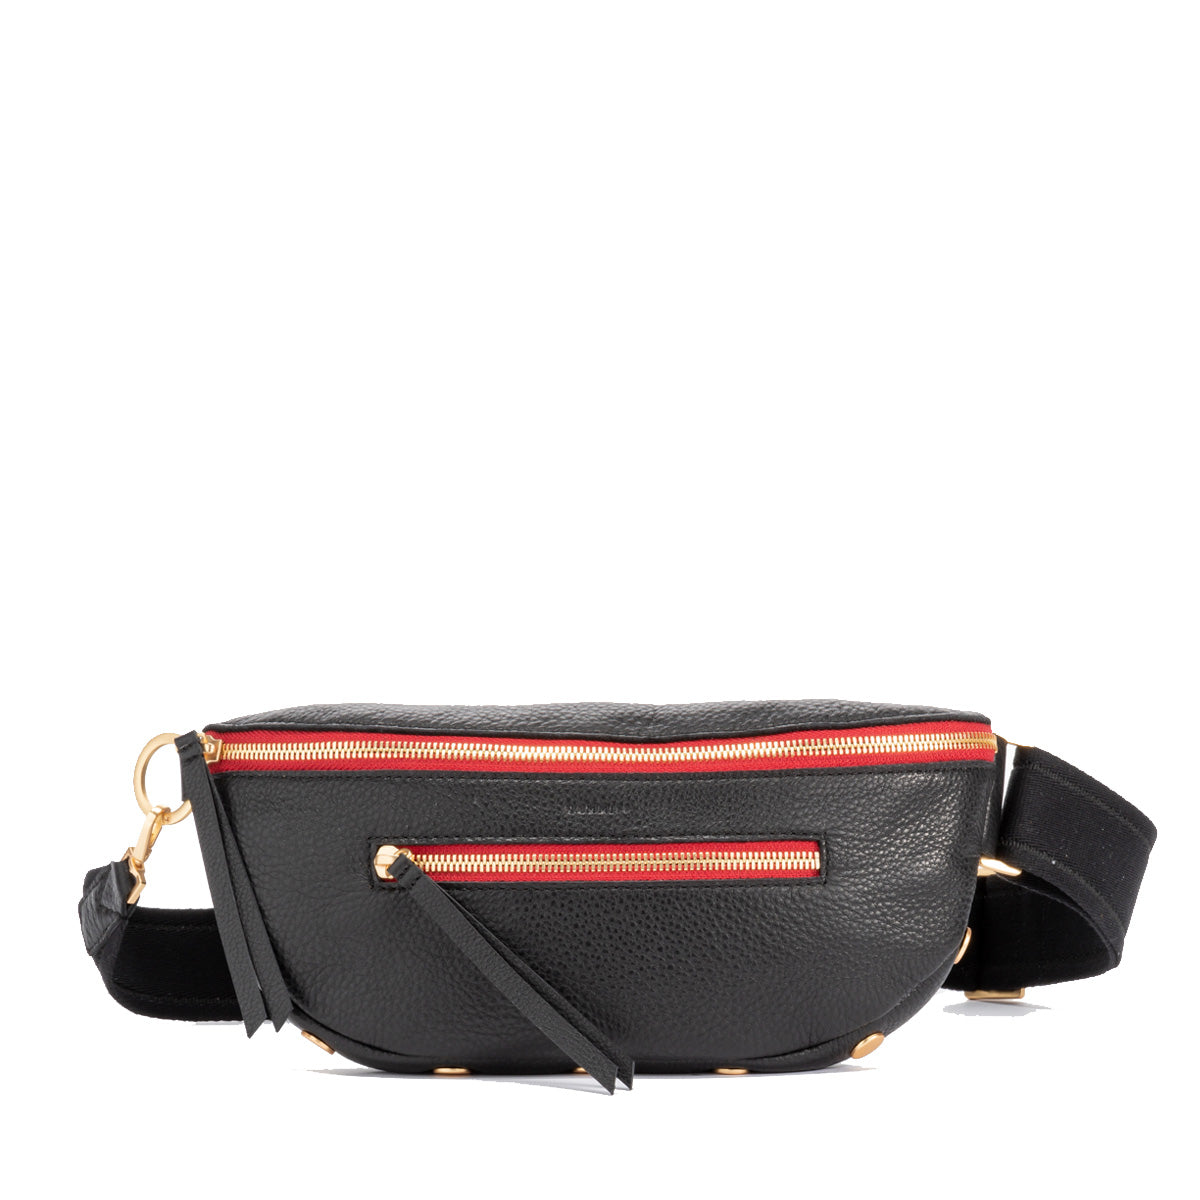 Hammitt Charles Belt Bag - Black/Red Zip/Gold HW